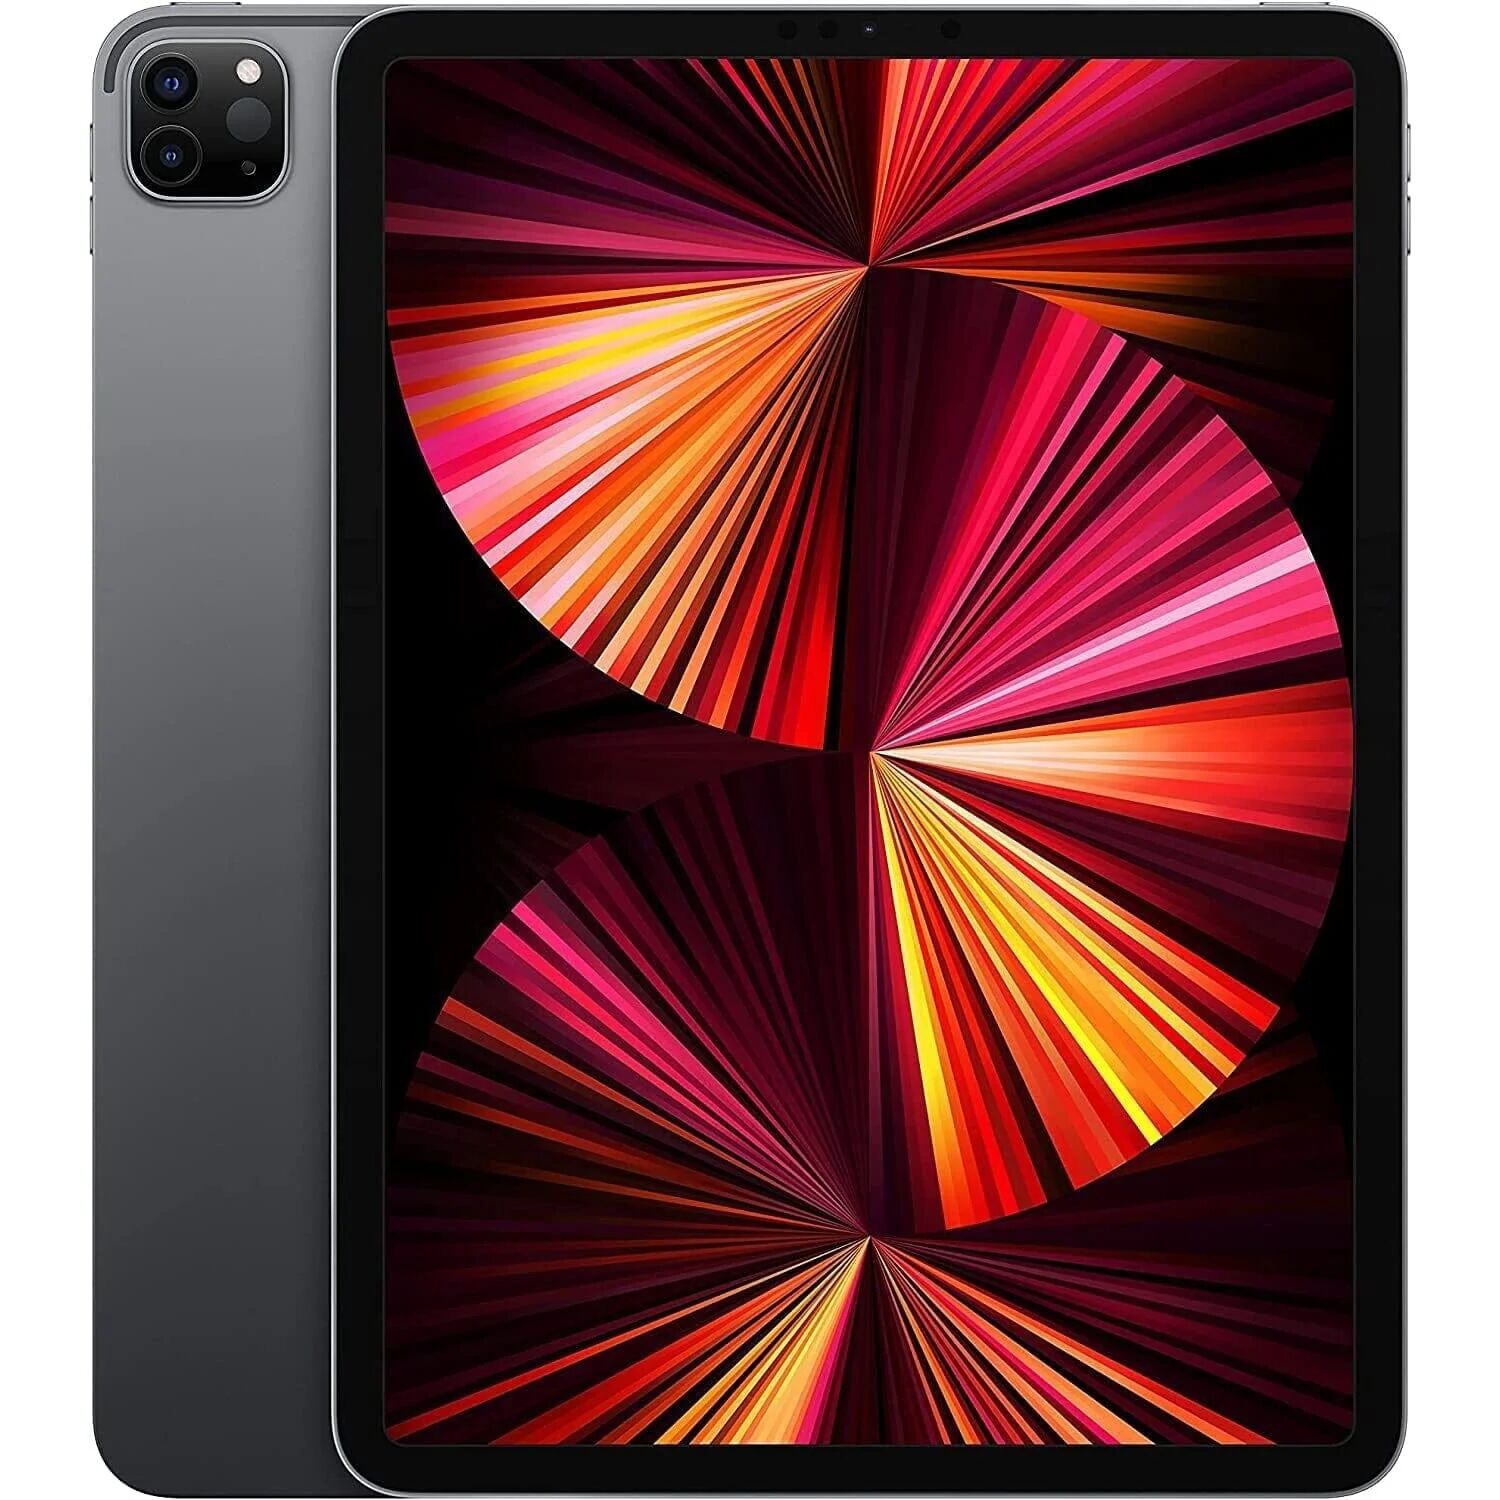 DailySale Apple iPad Pro 11-inch 3rd Gen (Wi-Fi + Cellular , 256GB) - Space Gray (Refurbished)